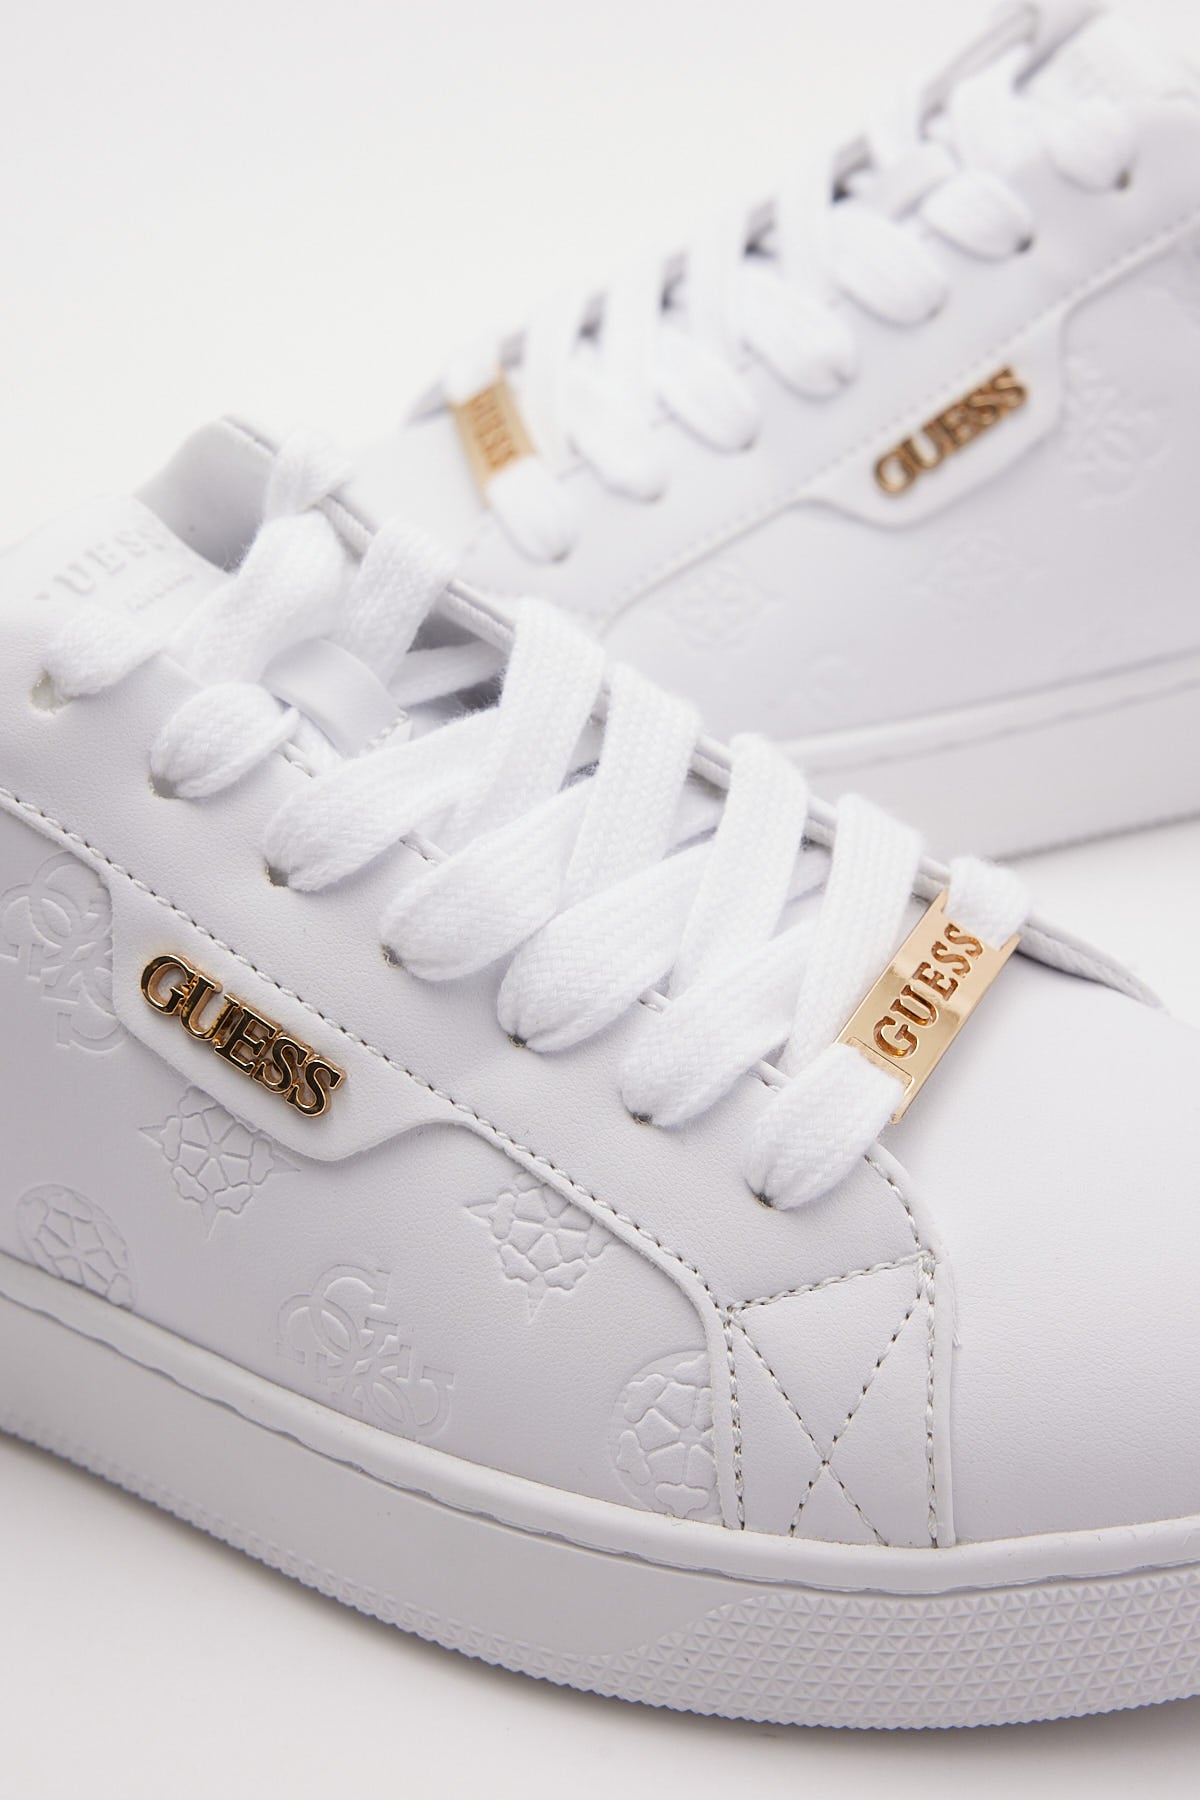 Guess Originals Renzy Sneaker White